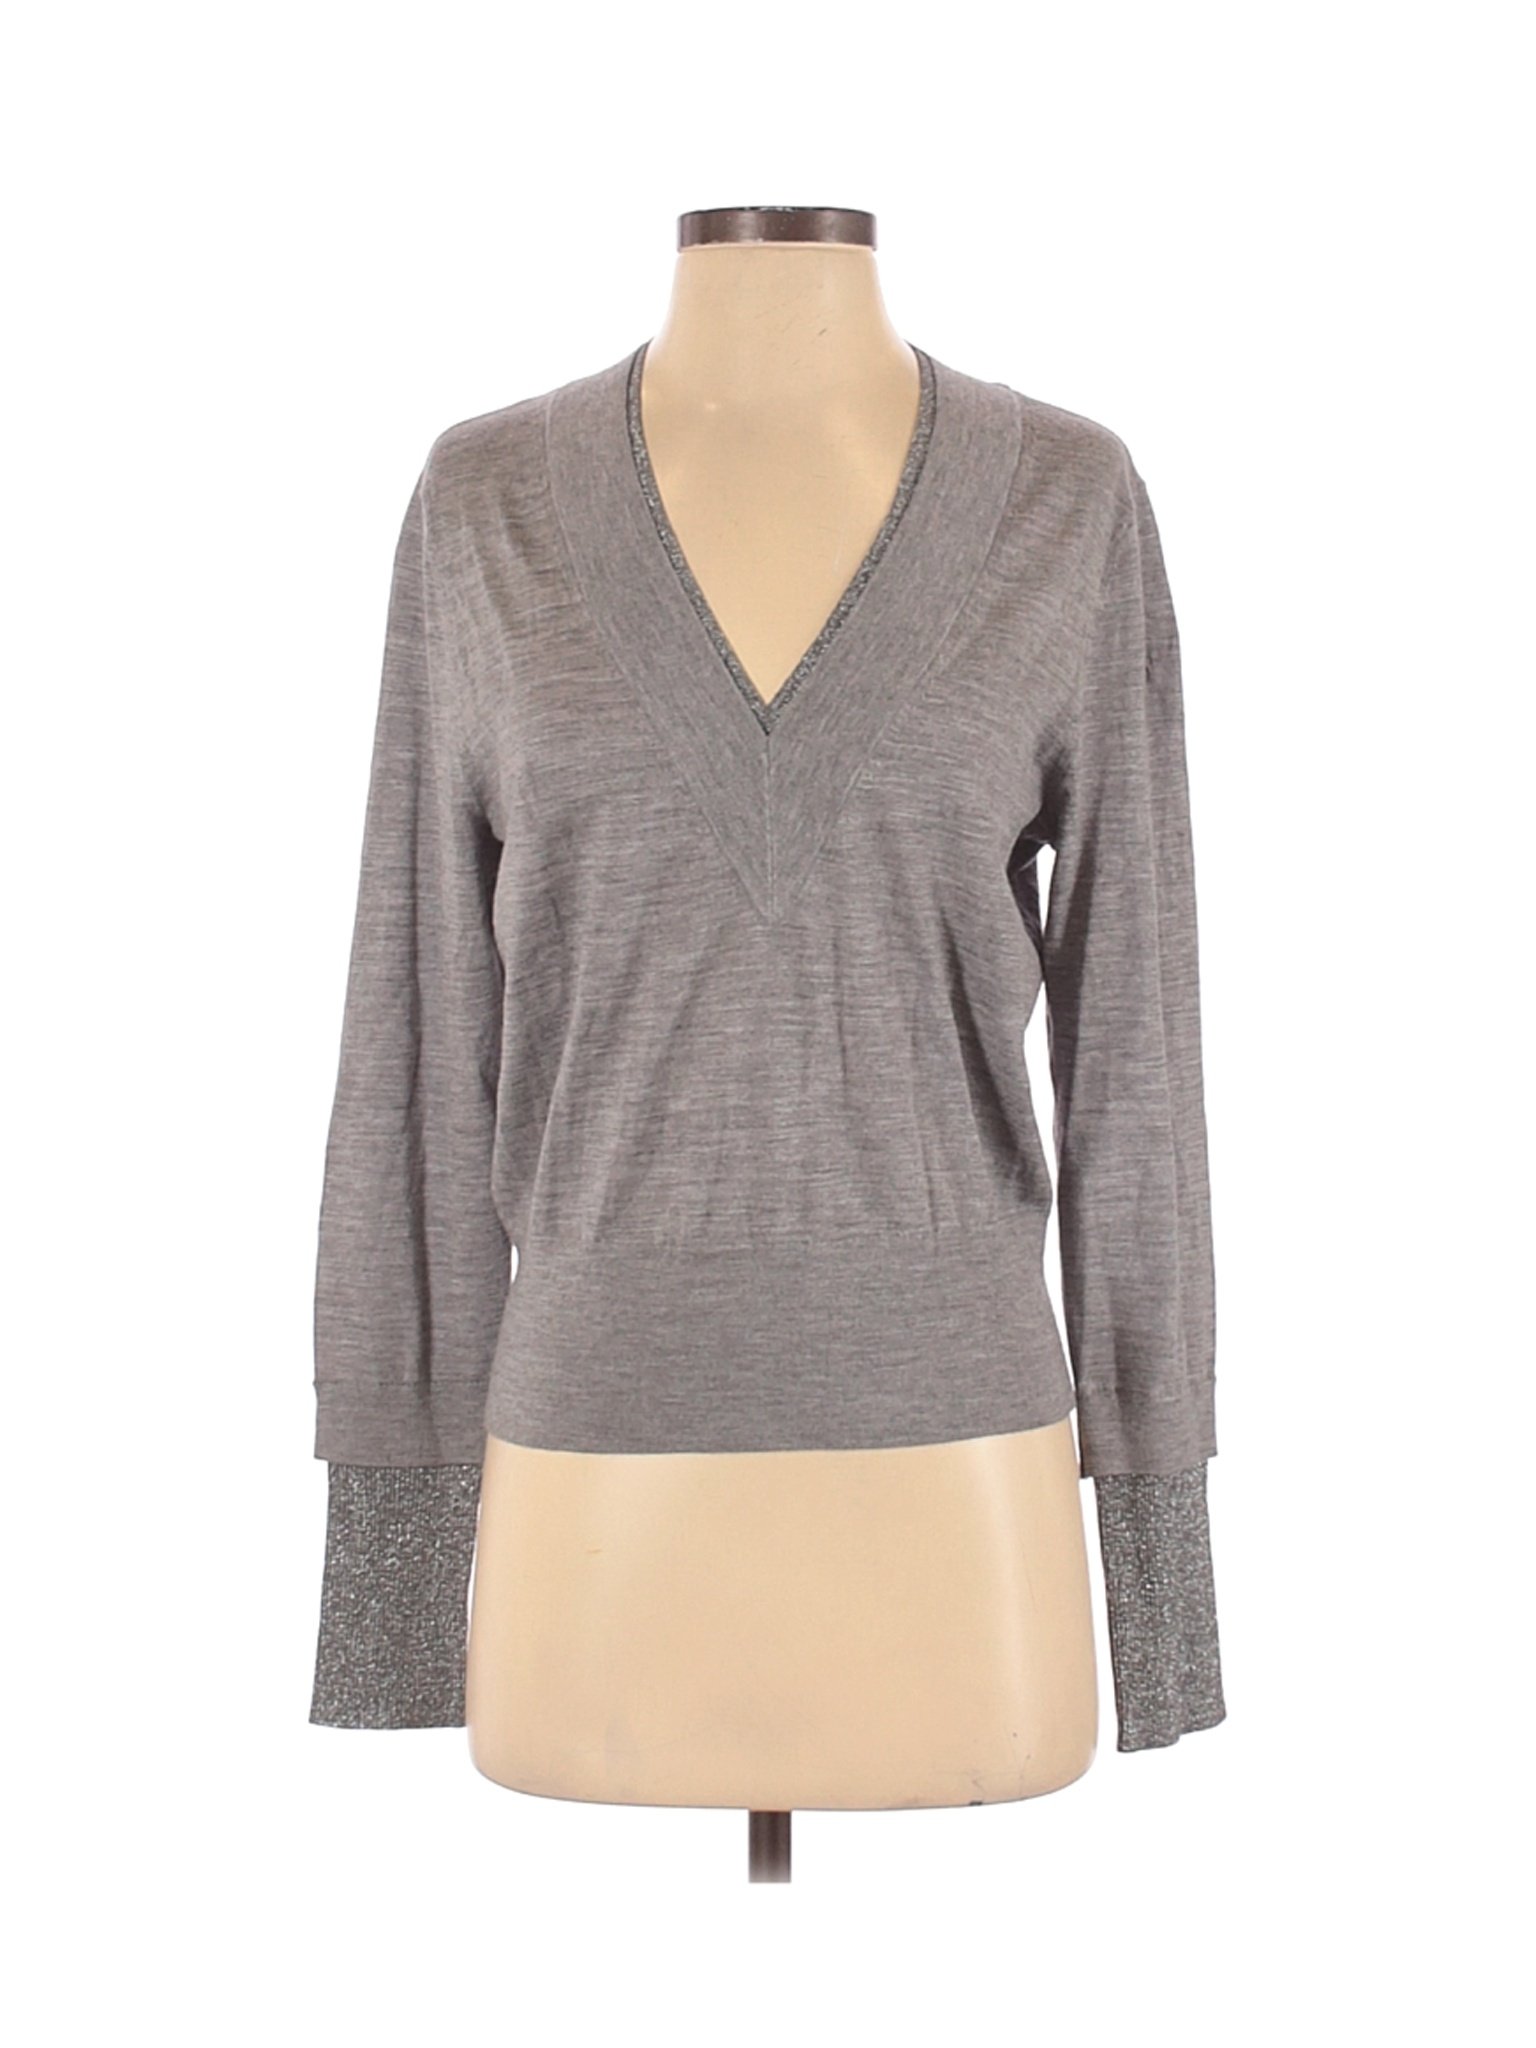 NWT Veronica Beard Women Gray Wool Pullover Sweater S | eBay